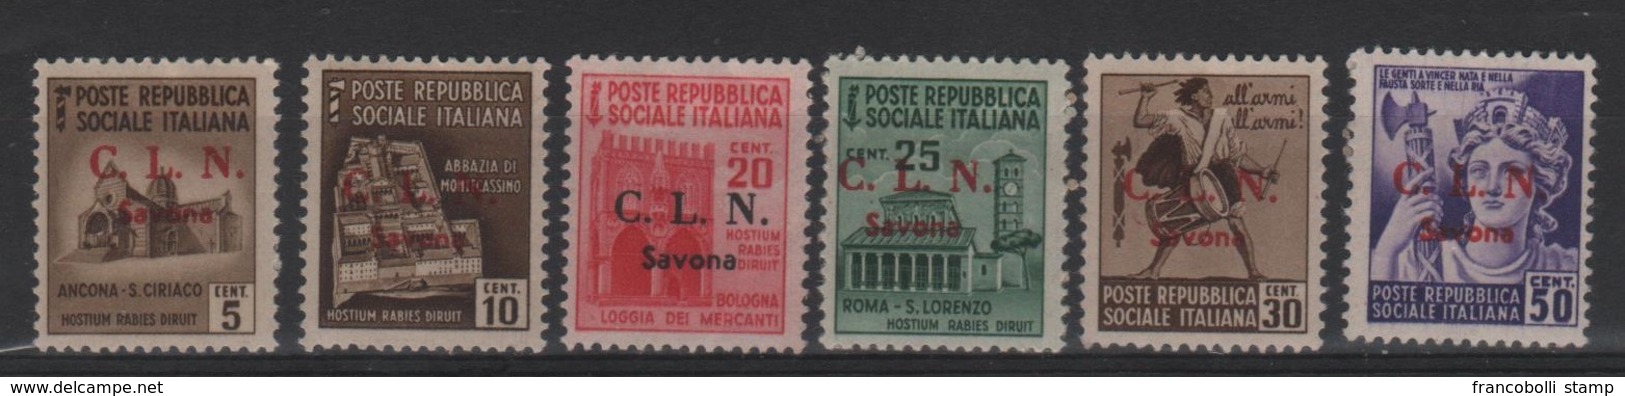 1945 C.L.N. Savona Lotto - Nationales Befreiungskomitee